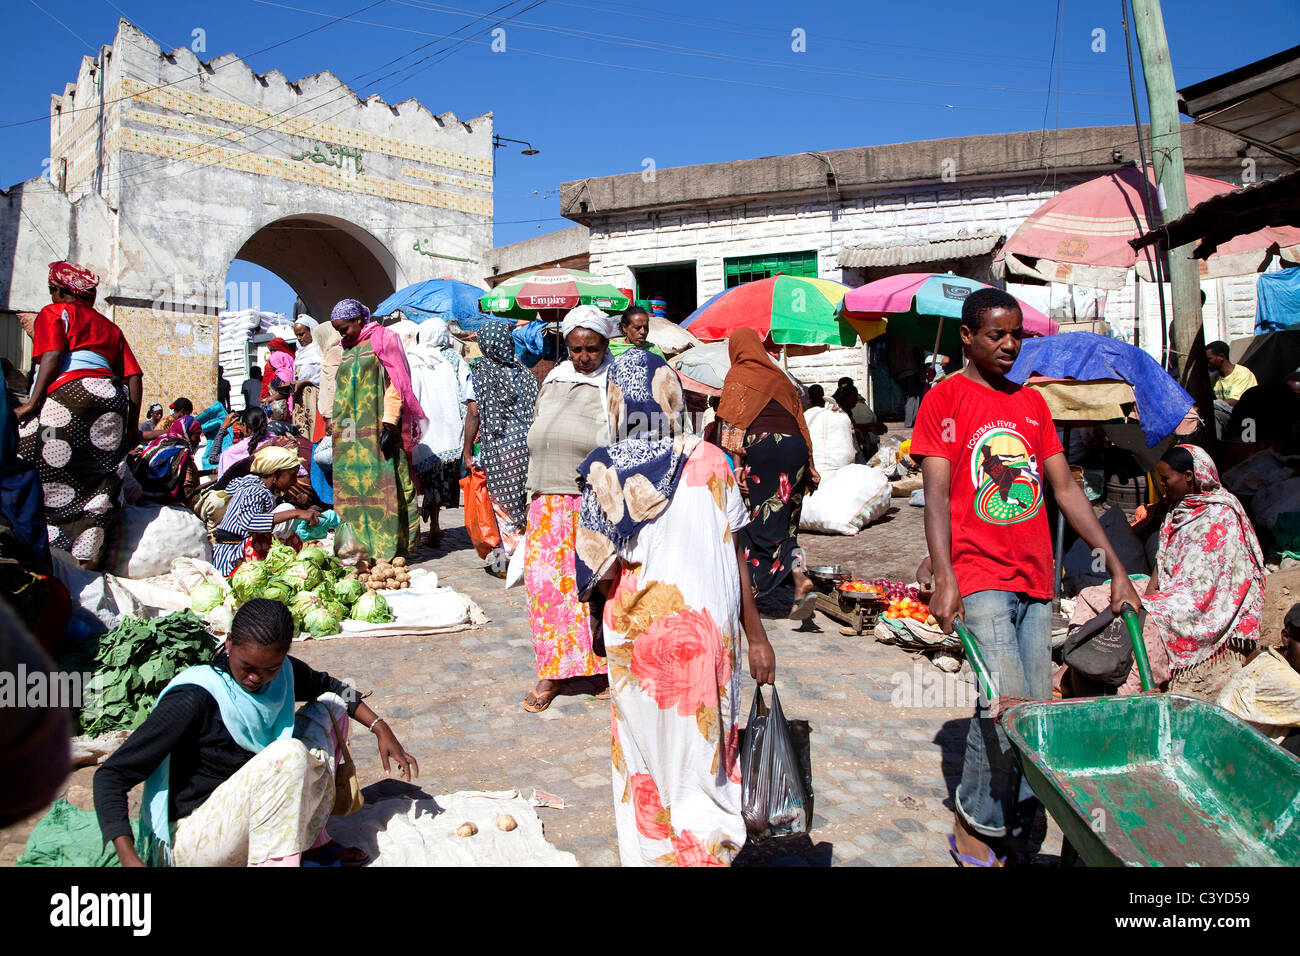 market in harar, ethiopia, africa Stock Photo